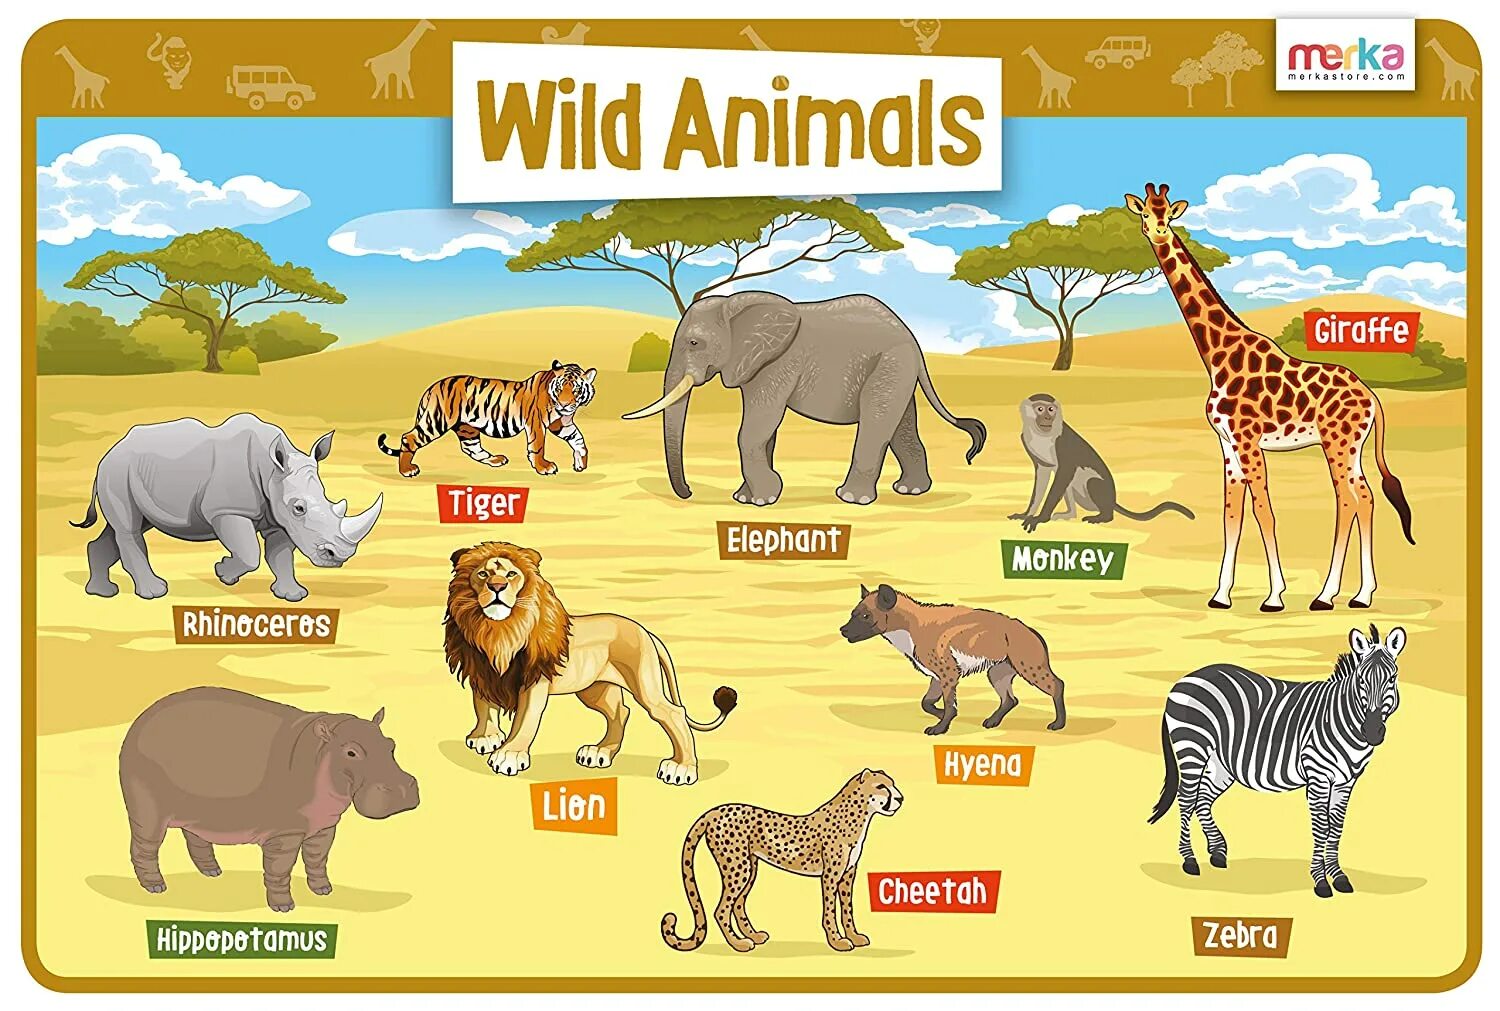 Starlight 3 at the animal park. Wild animals для детей. Wild animals название. Животные Африки на английском. Wild animals на английском.